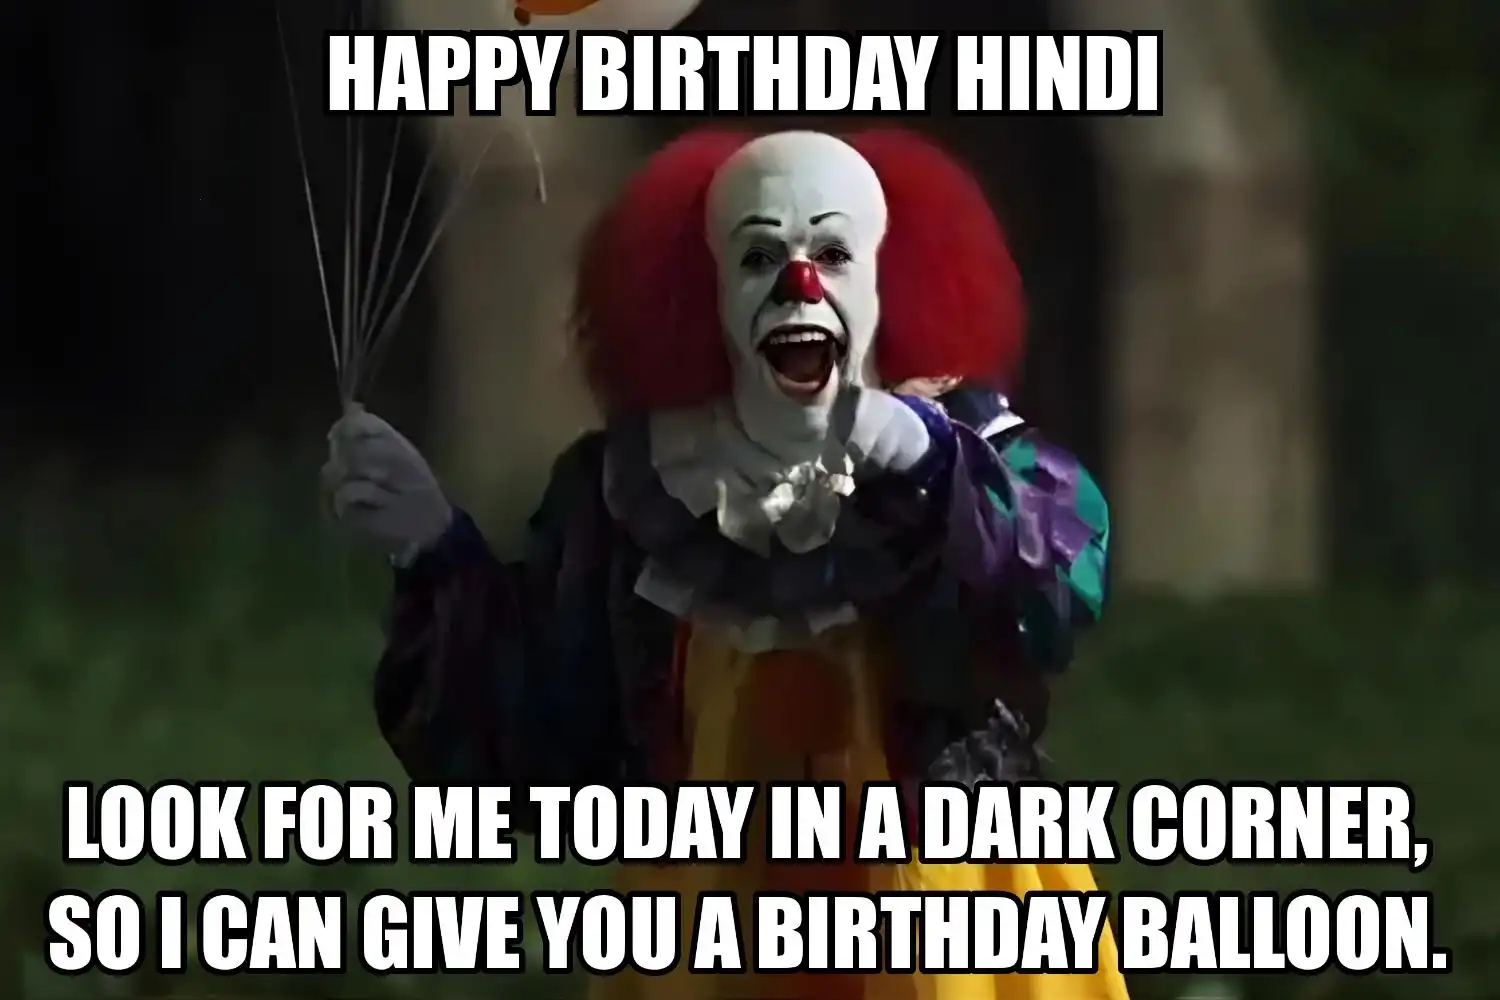 Happy Birthday Hindi I Can Give You A Balloon Meme